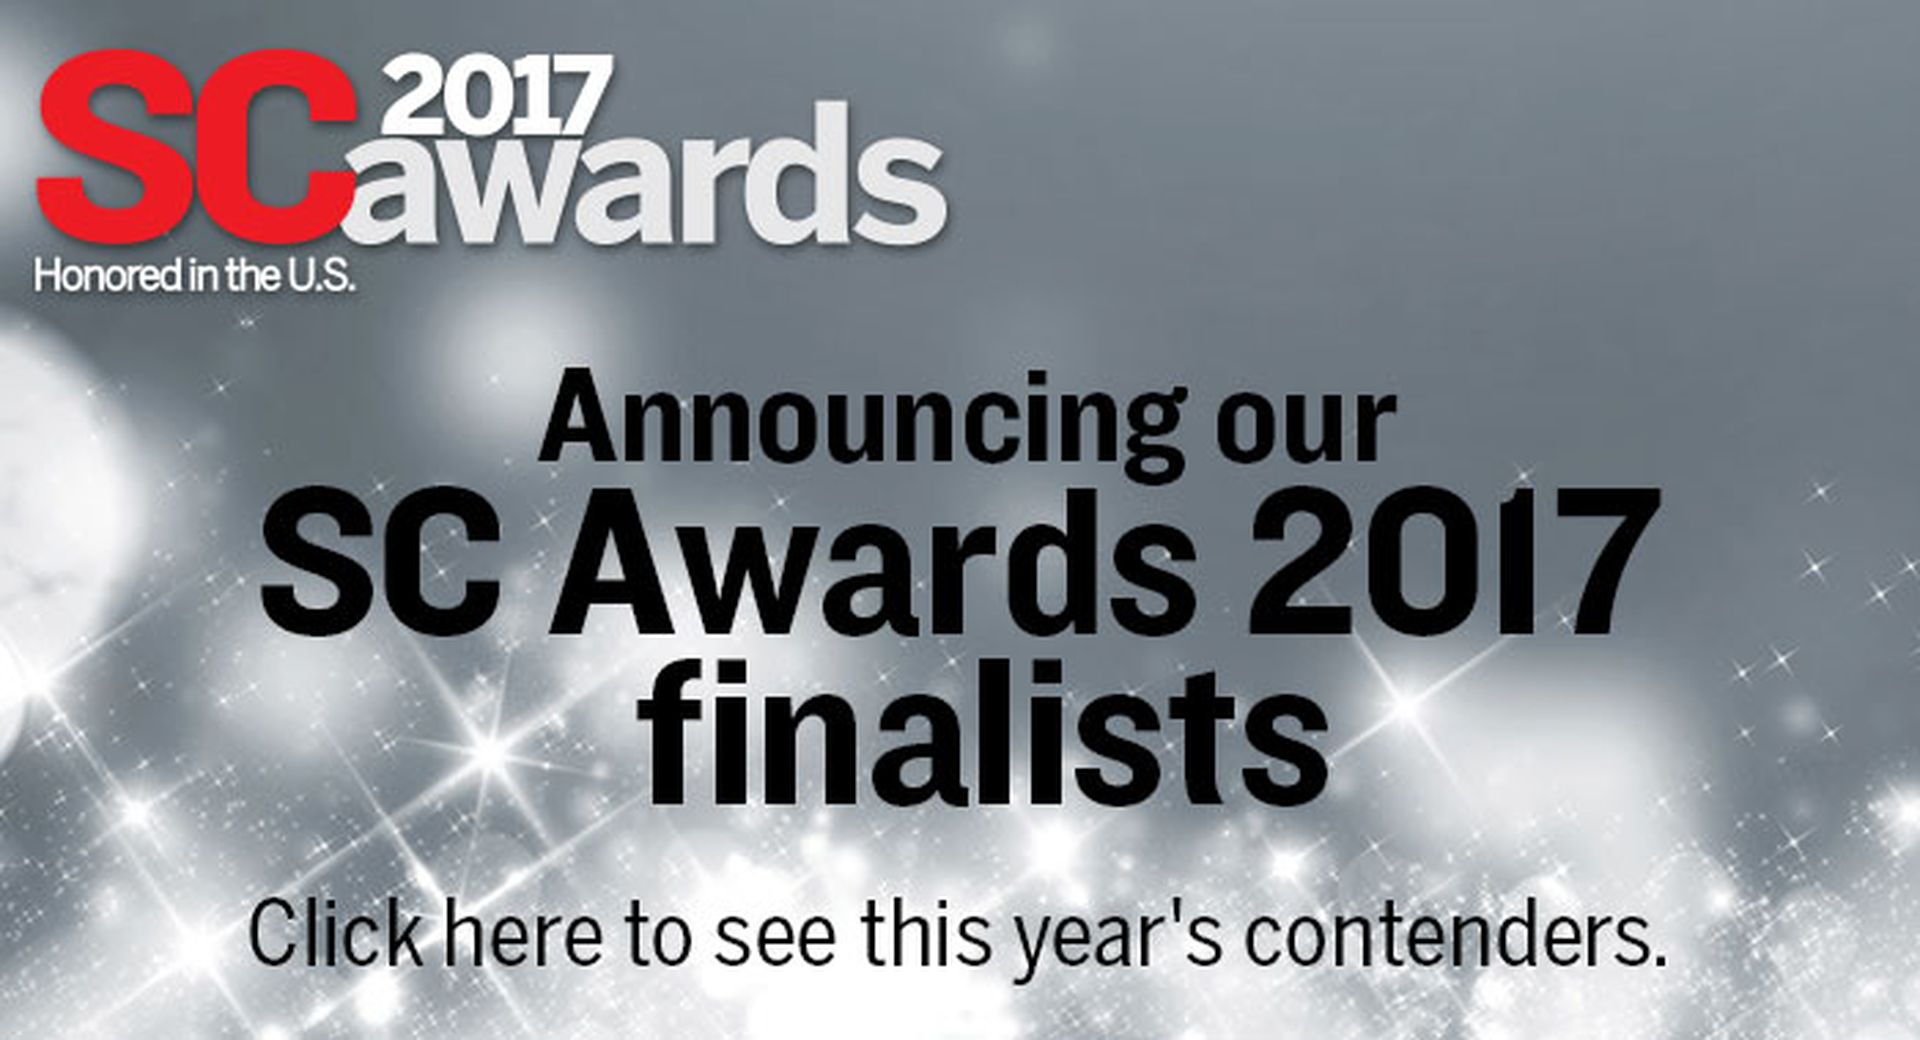 SC Awards 2017 finalists